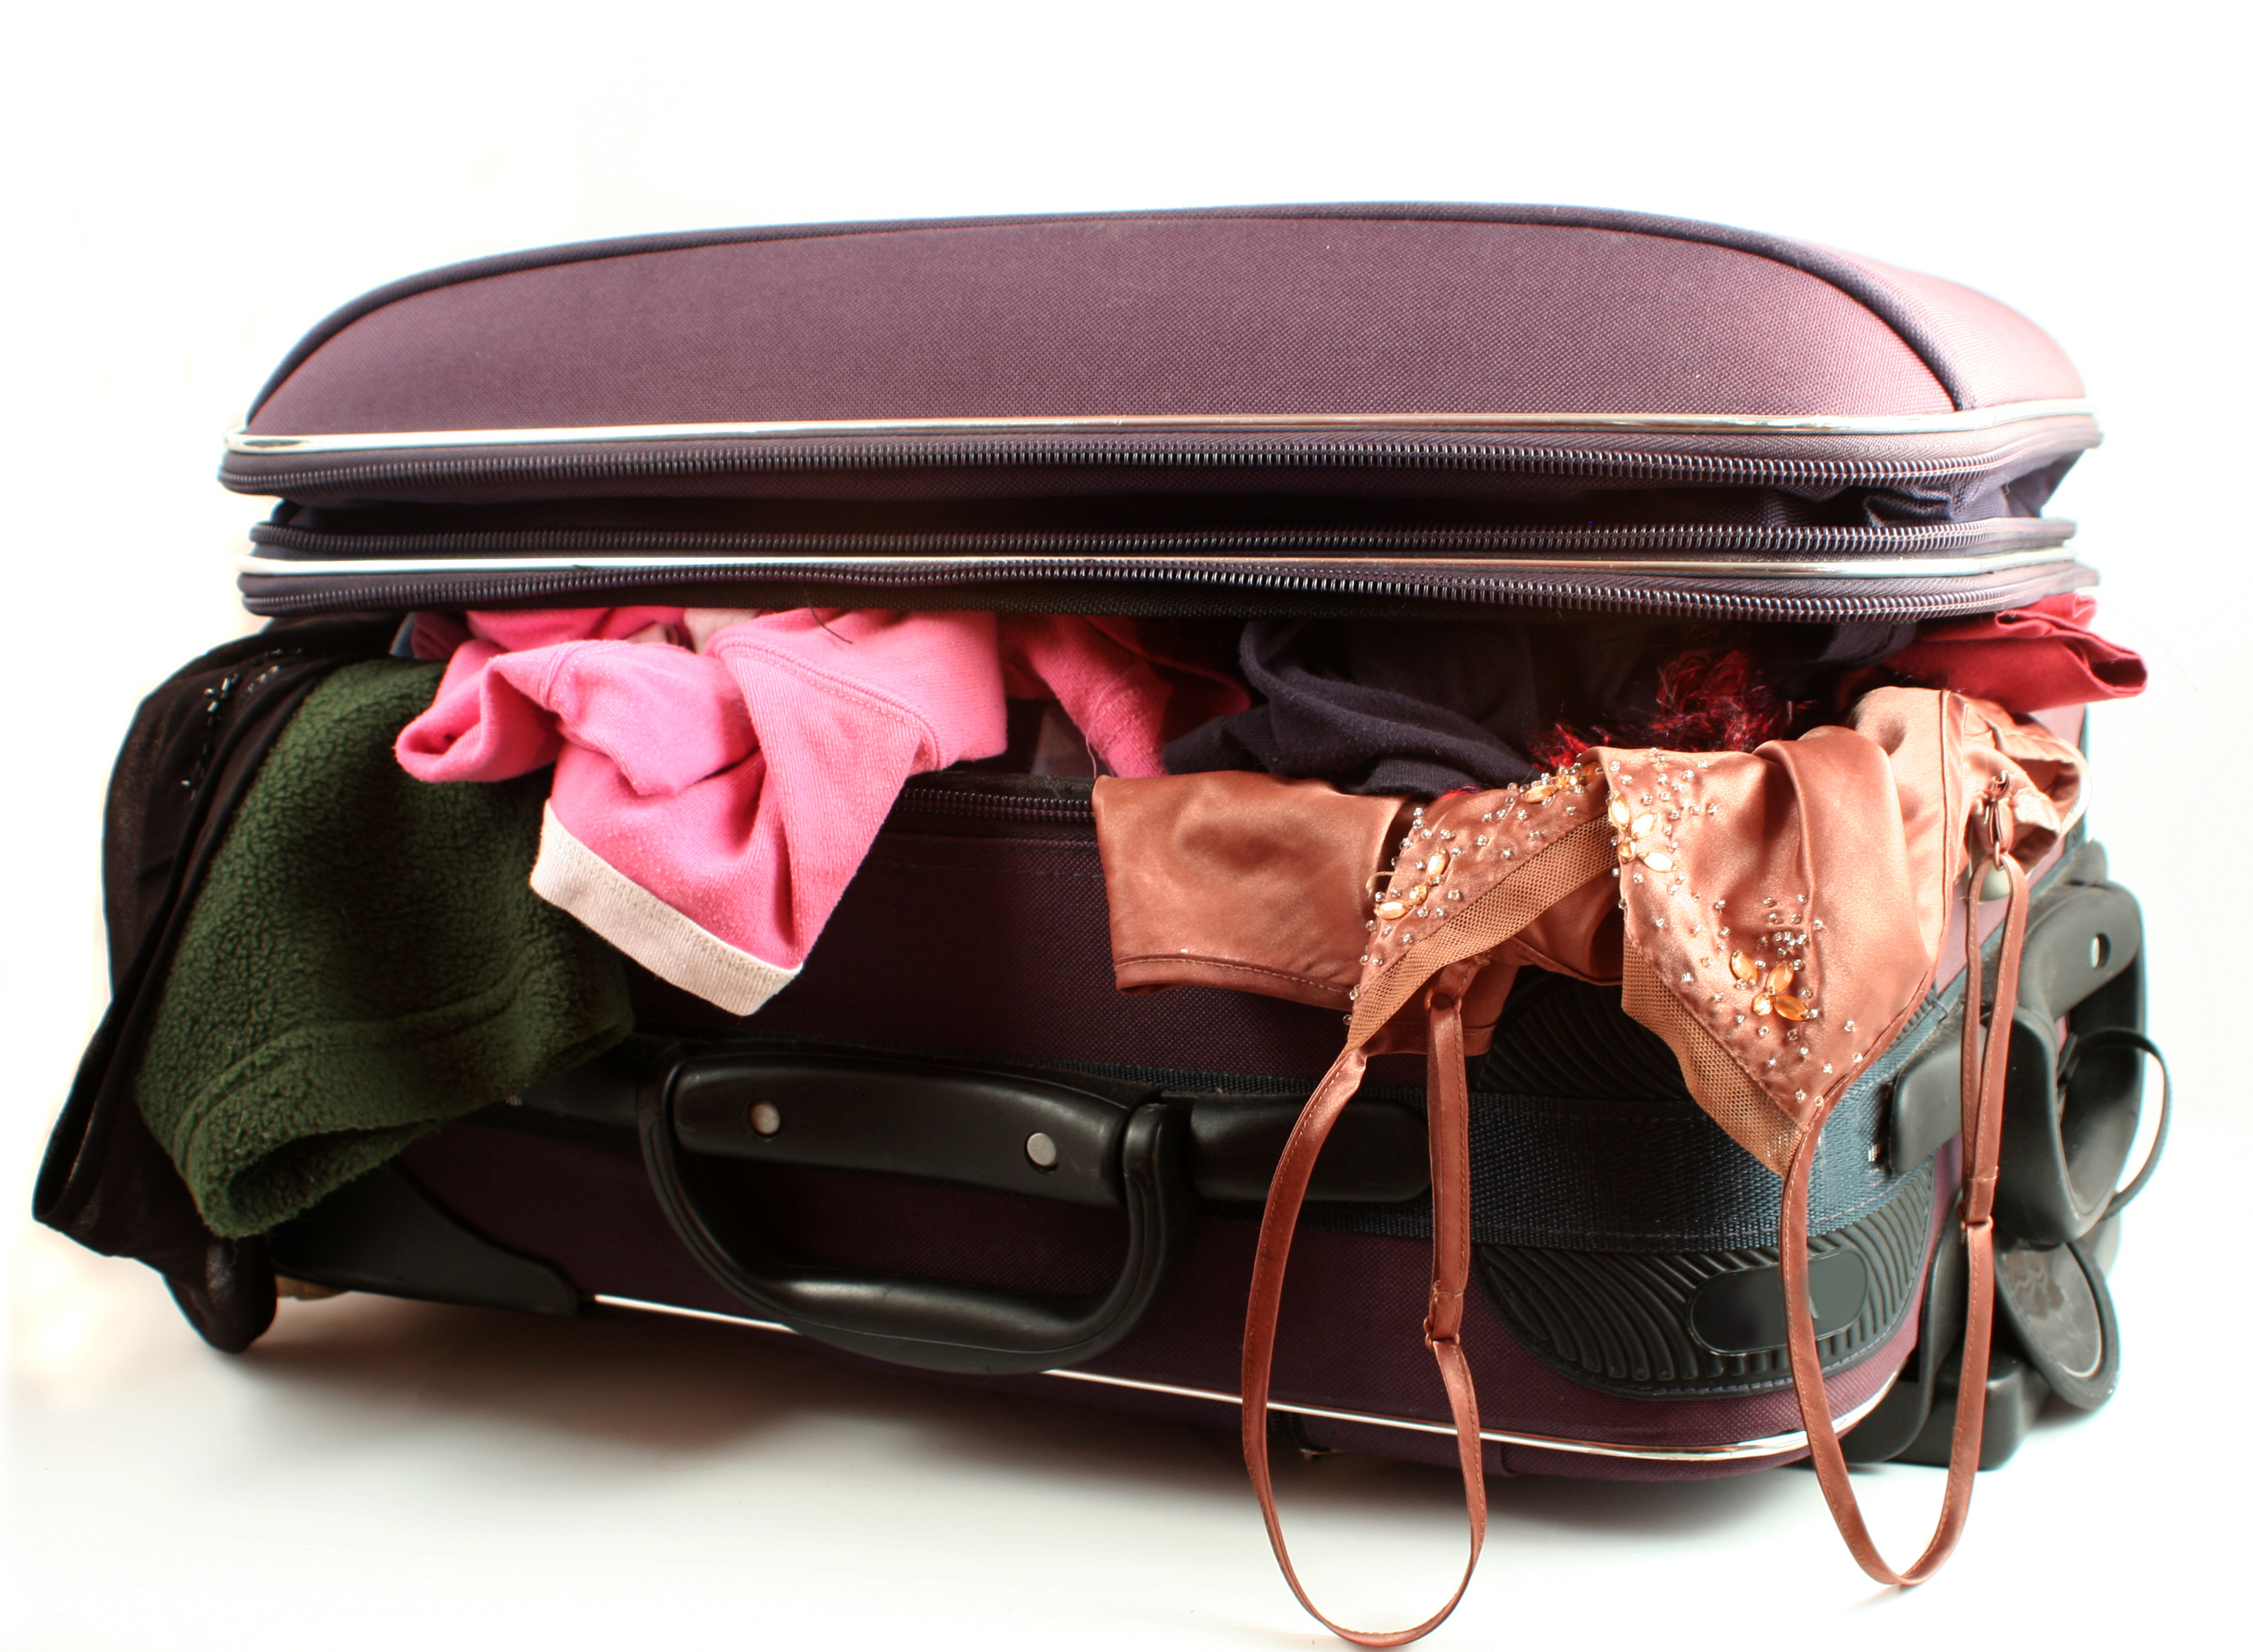 http://mygazeta.com/i/2012/08/luggage-packing-travel.jpg